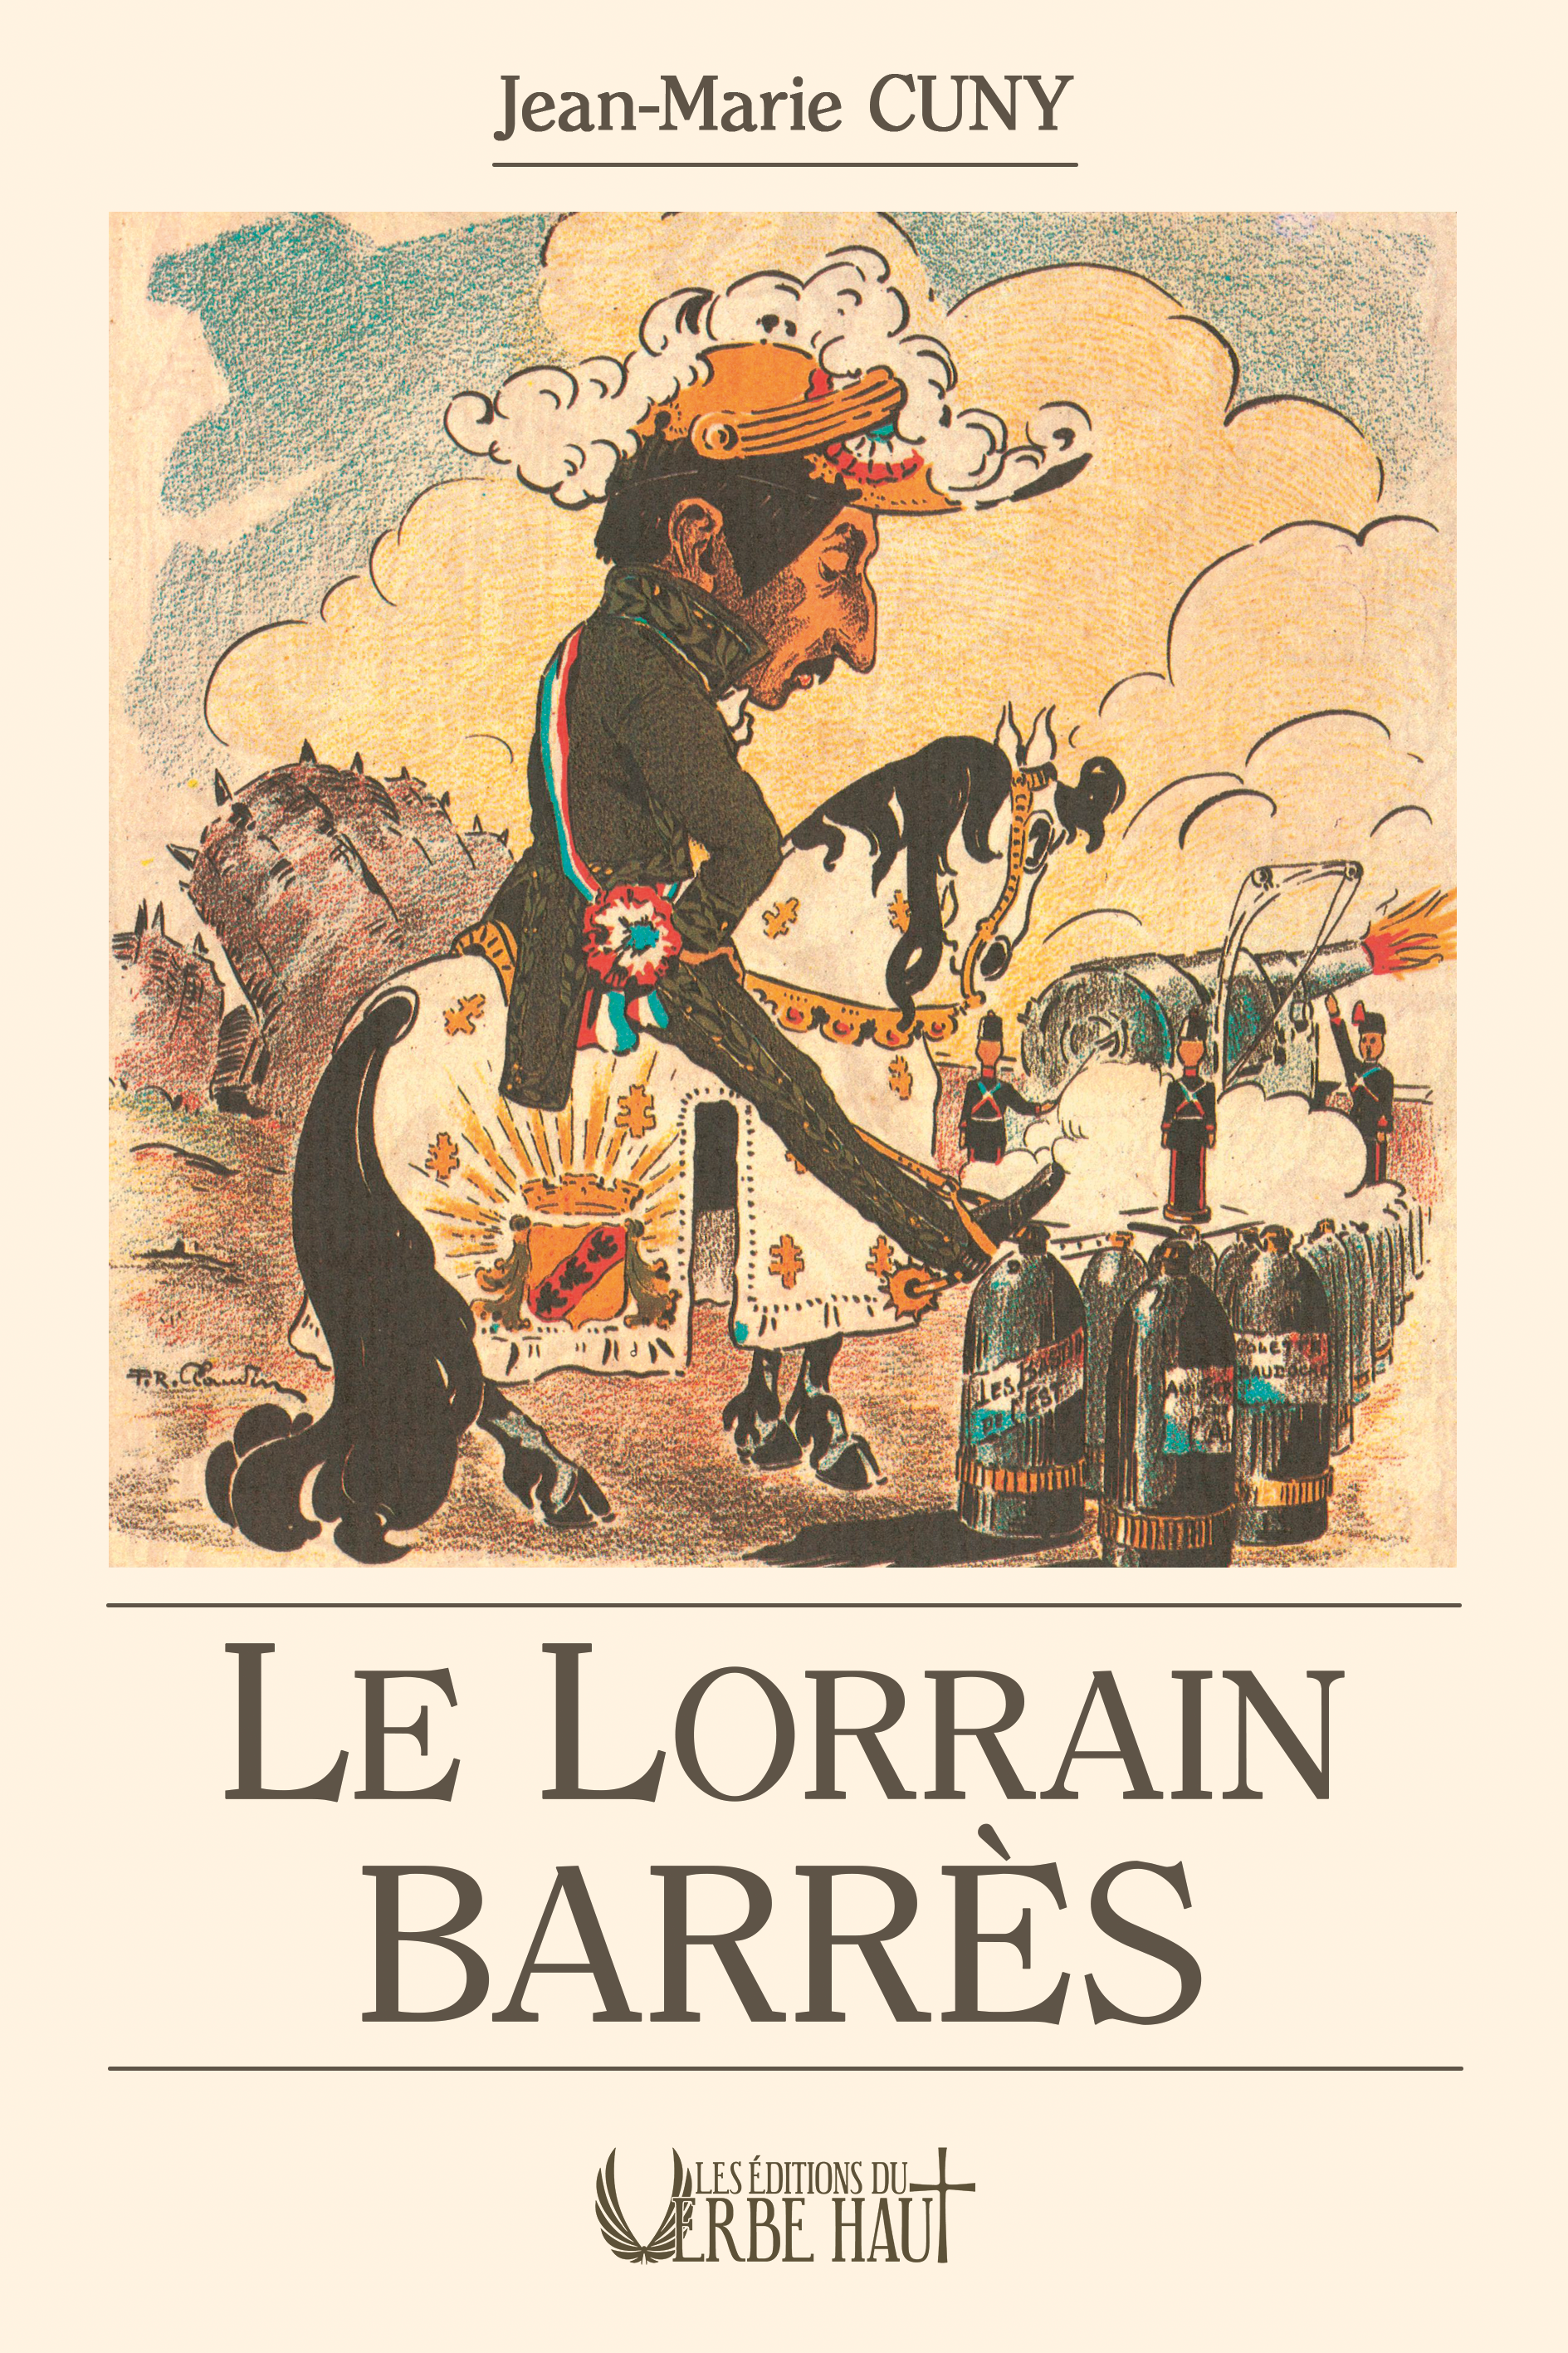 Le Lorrain Barrès, de Jean-Marie Cuny